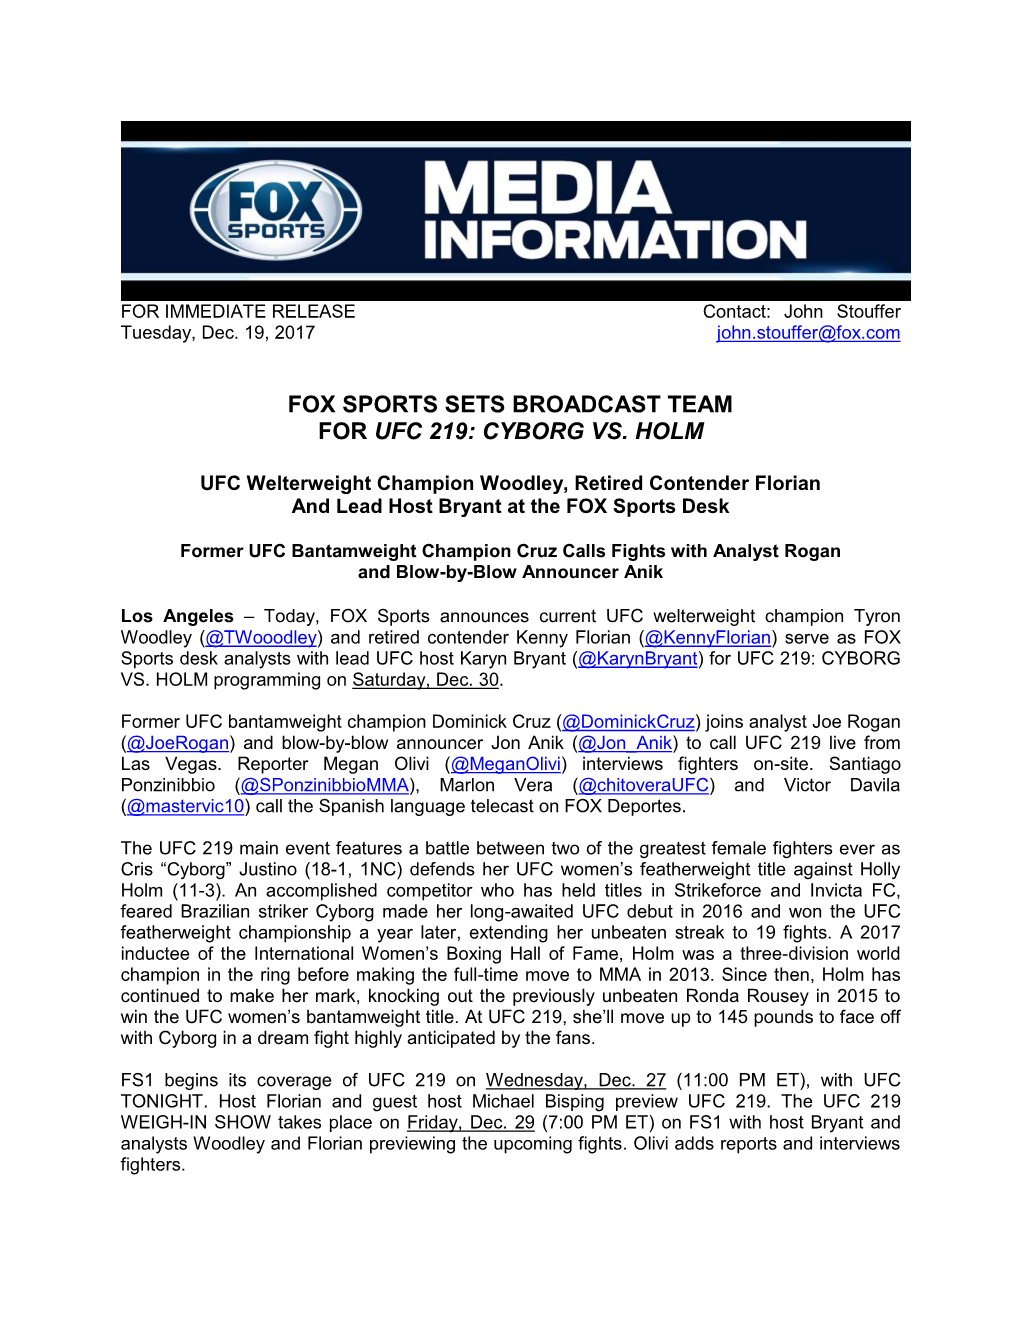 Fox Sports Sets Broadcast Team for Ufc 219: Cyborg Vs